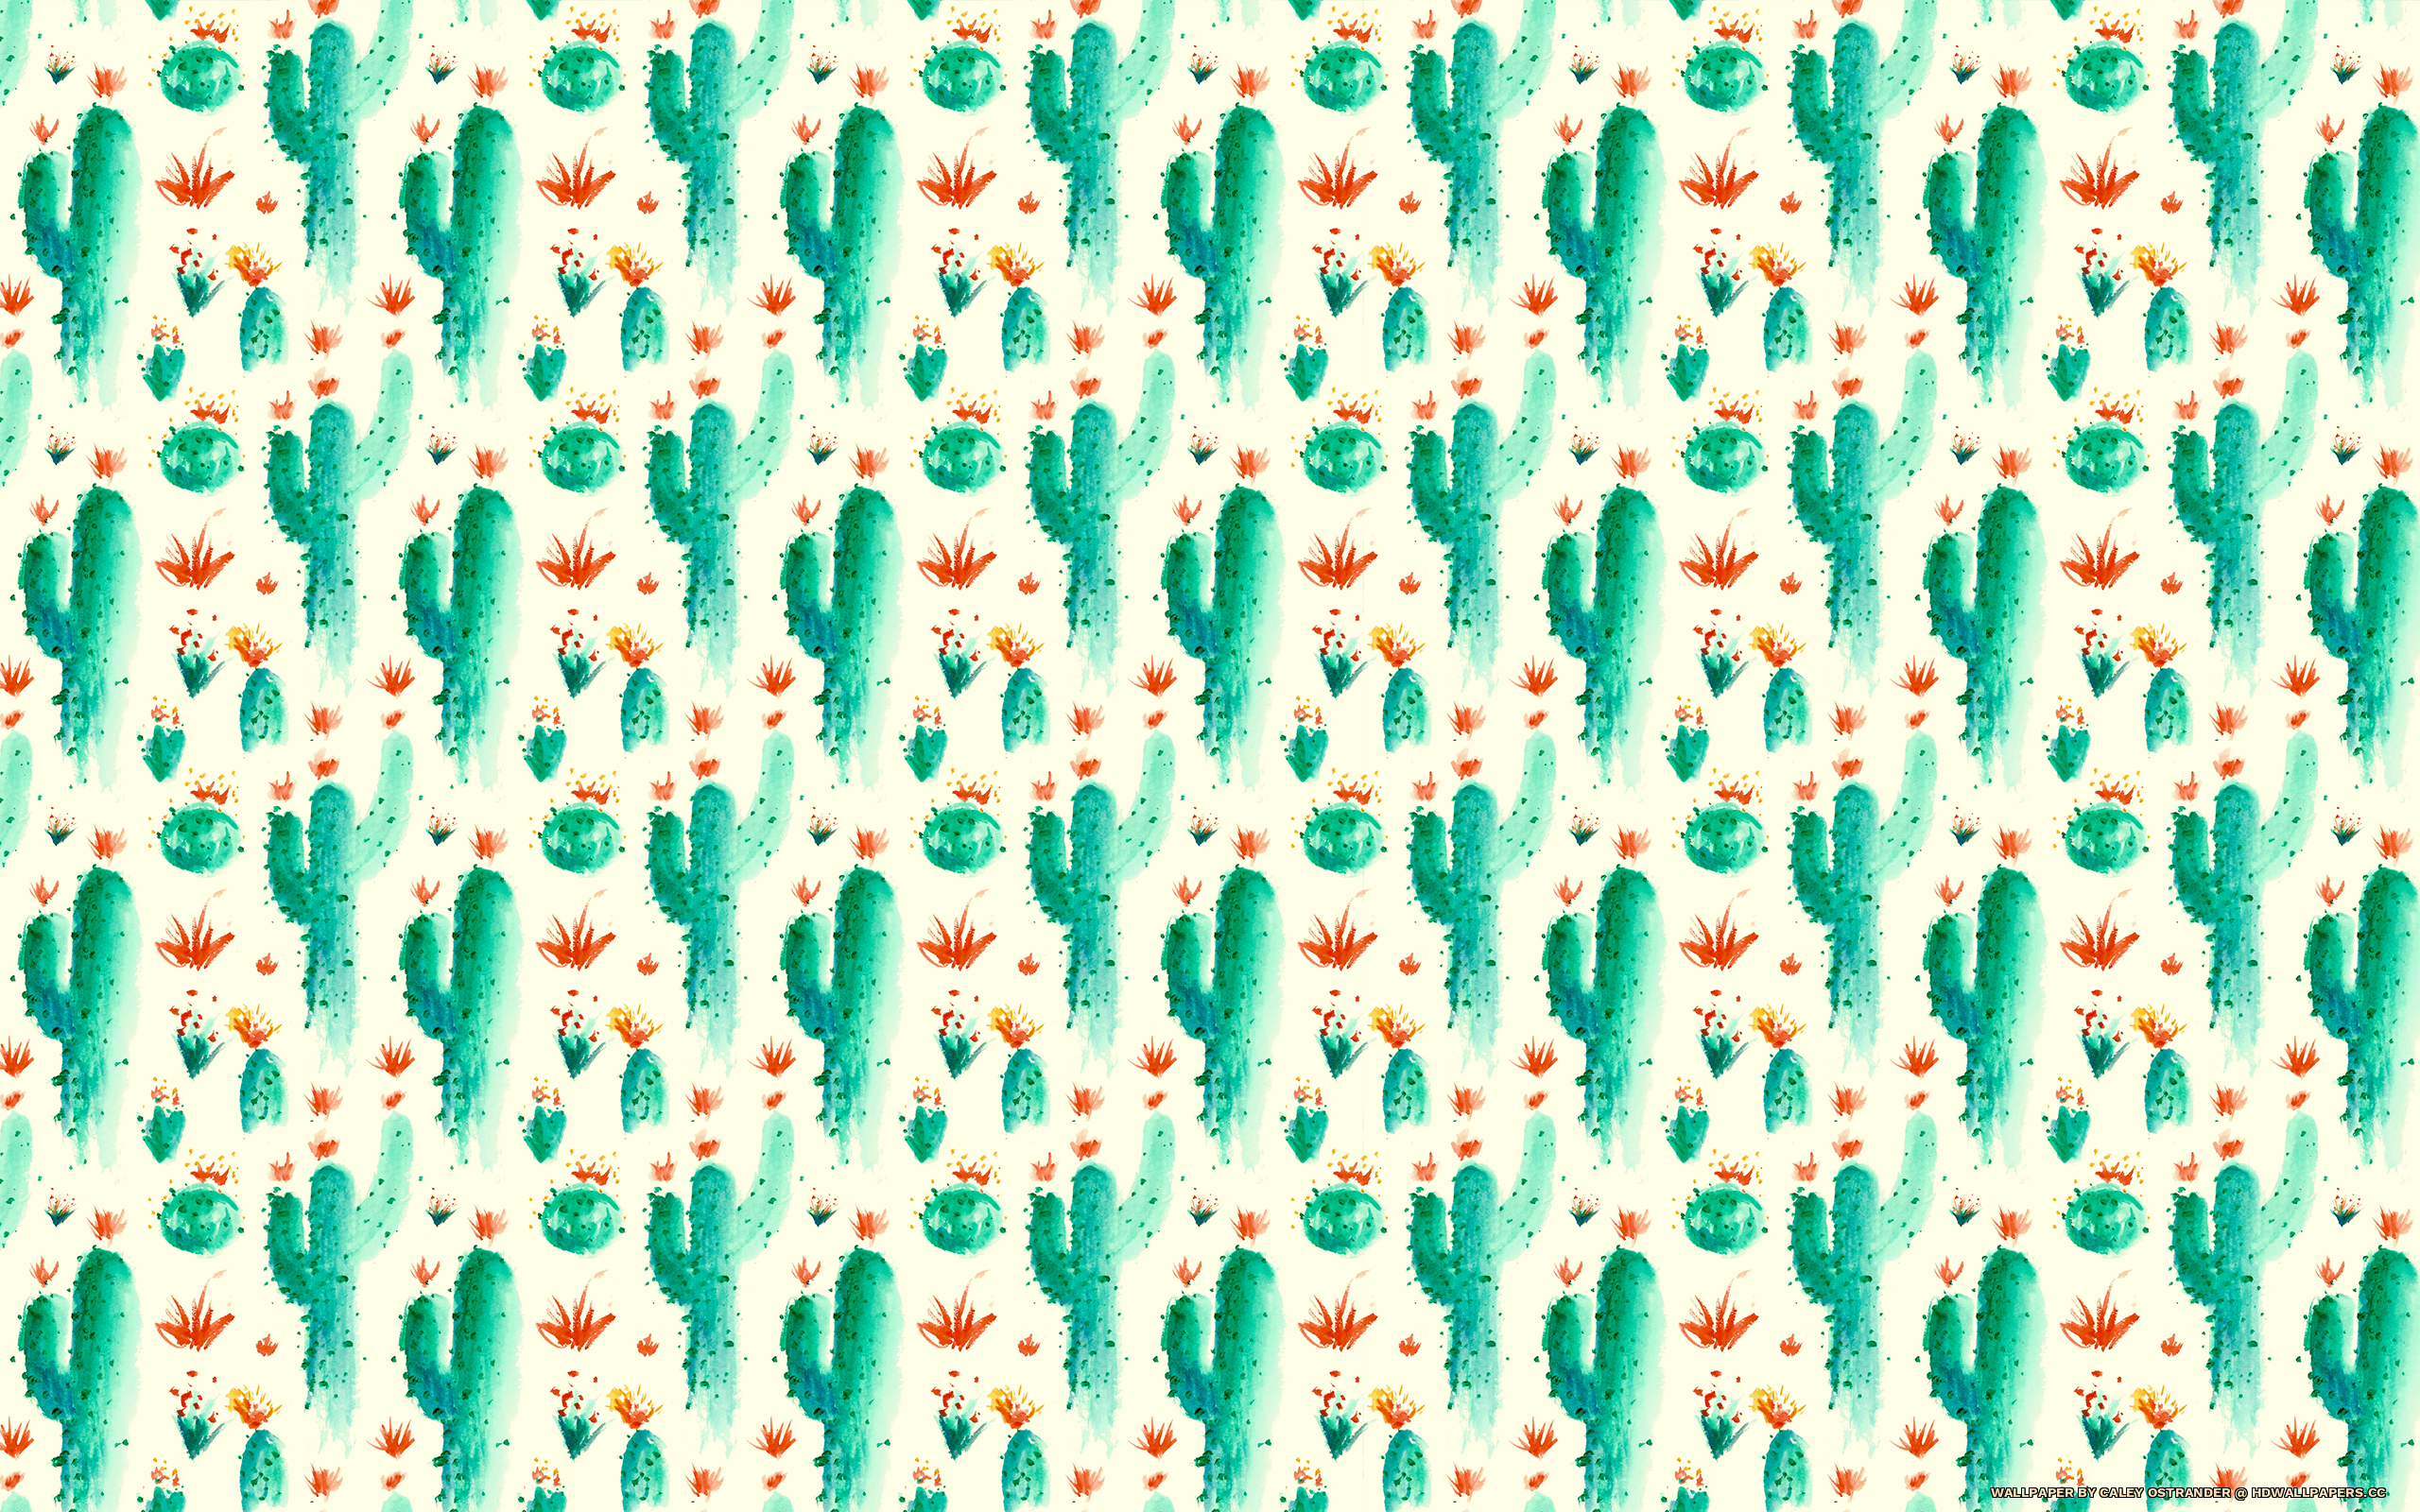 Cactus Pattern - Hd Wallpapers - Cactus Patterned Desktop